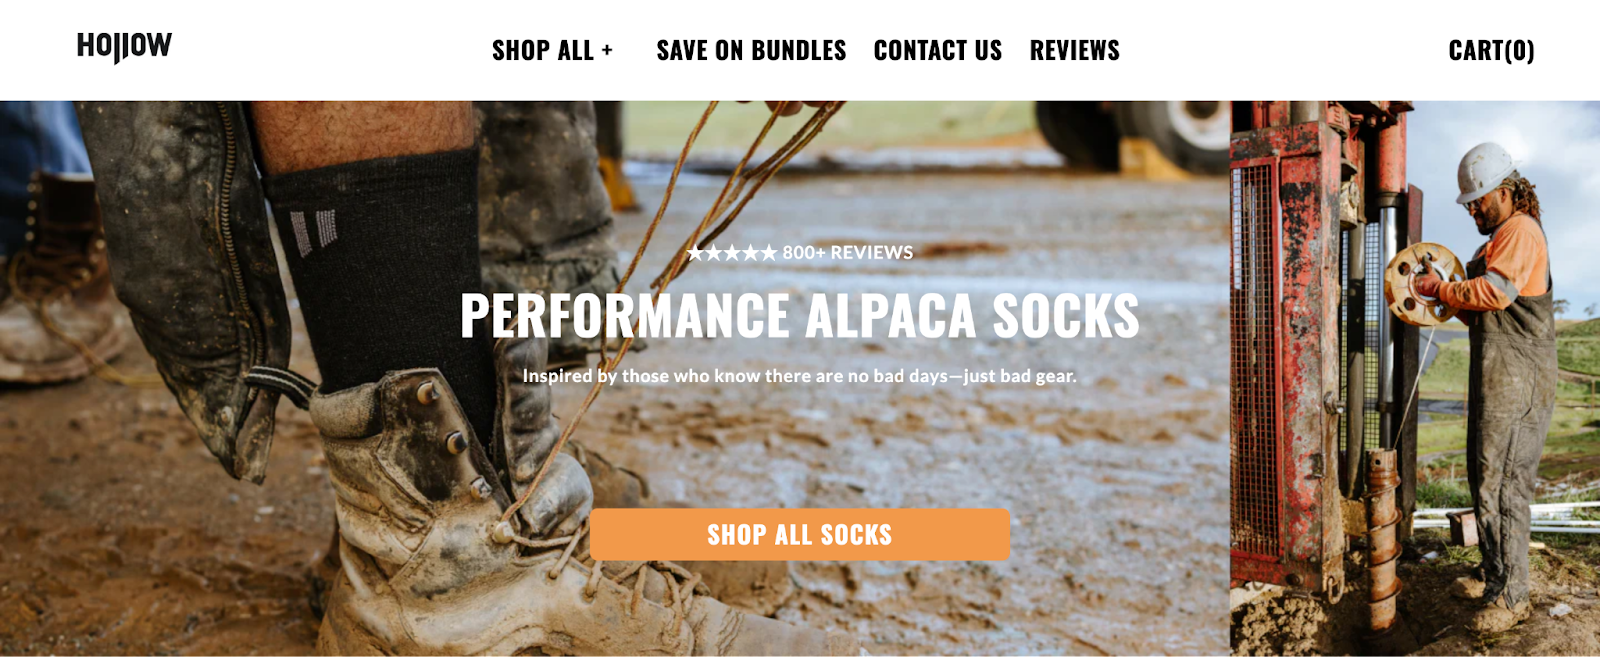 single product website example: Hollow Socks